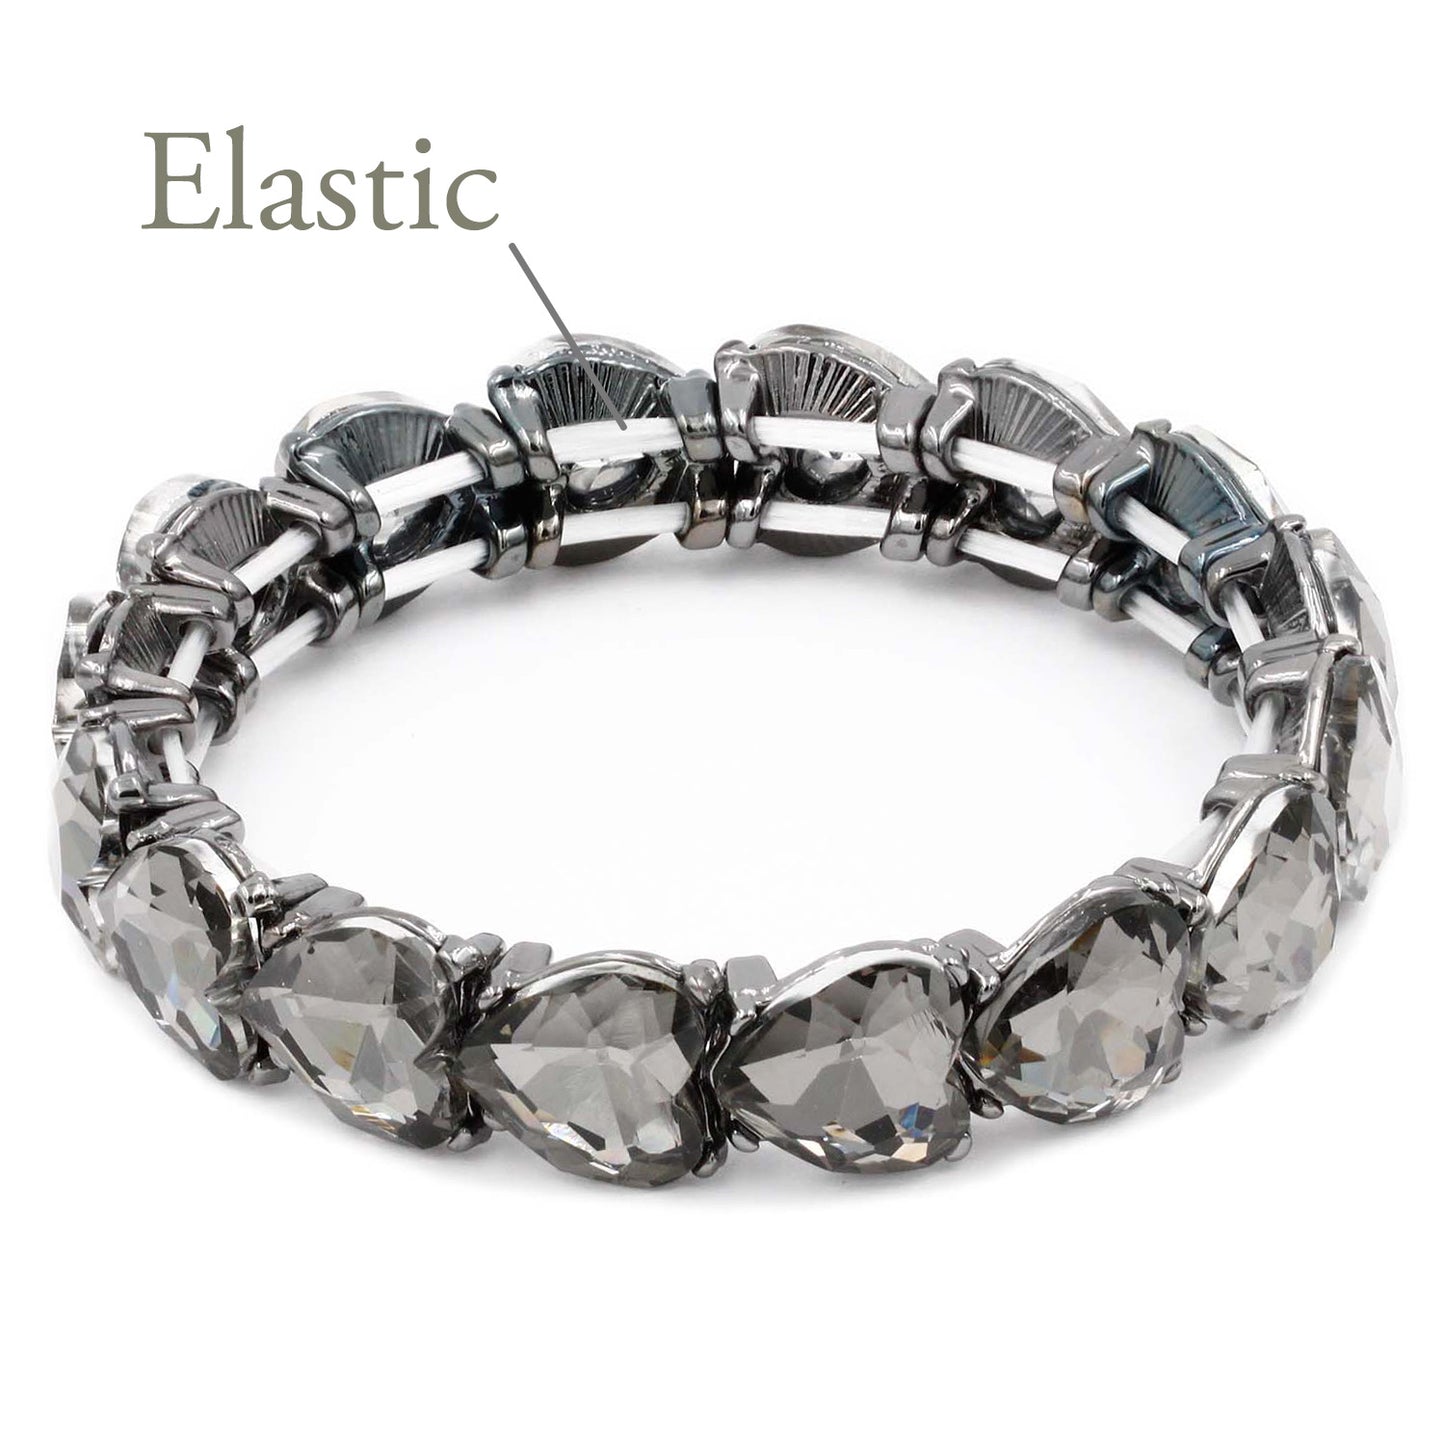 Lavencious Heart Shape Rhinestones Elastic Stretch Bracelet for Women (Hematite)